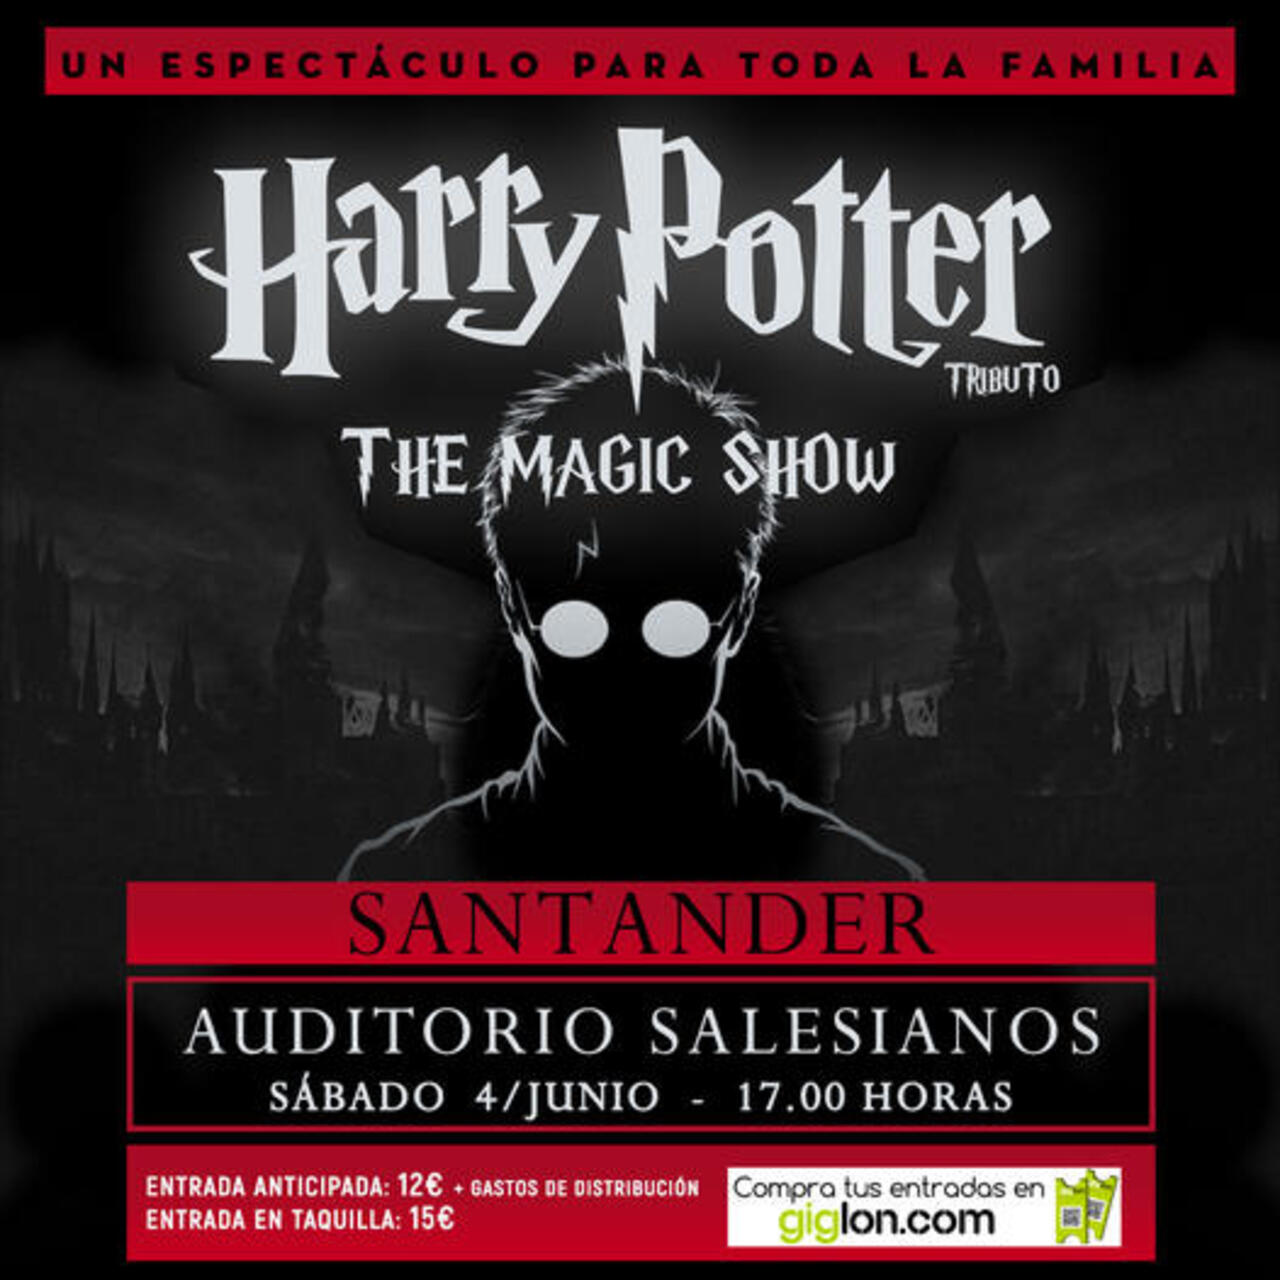 Harry Potter Tributo. The Magic Show